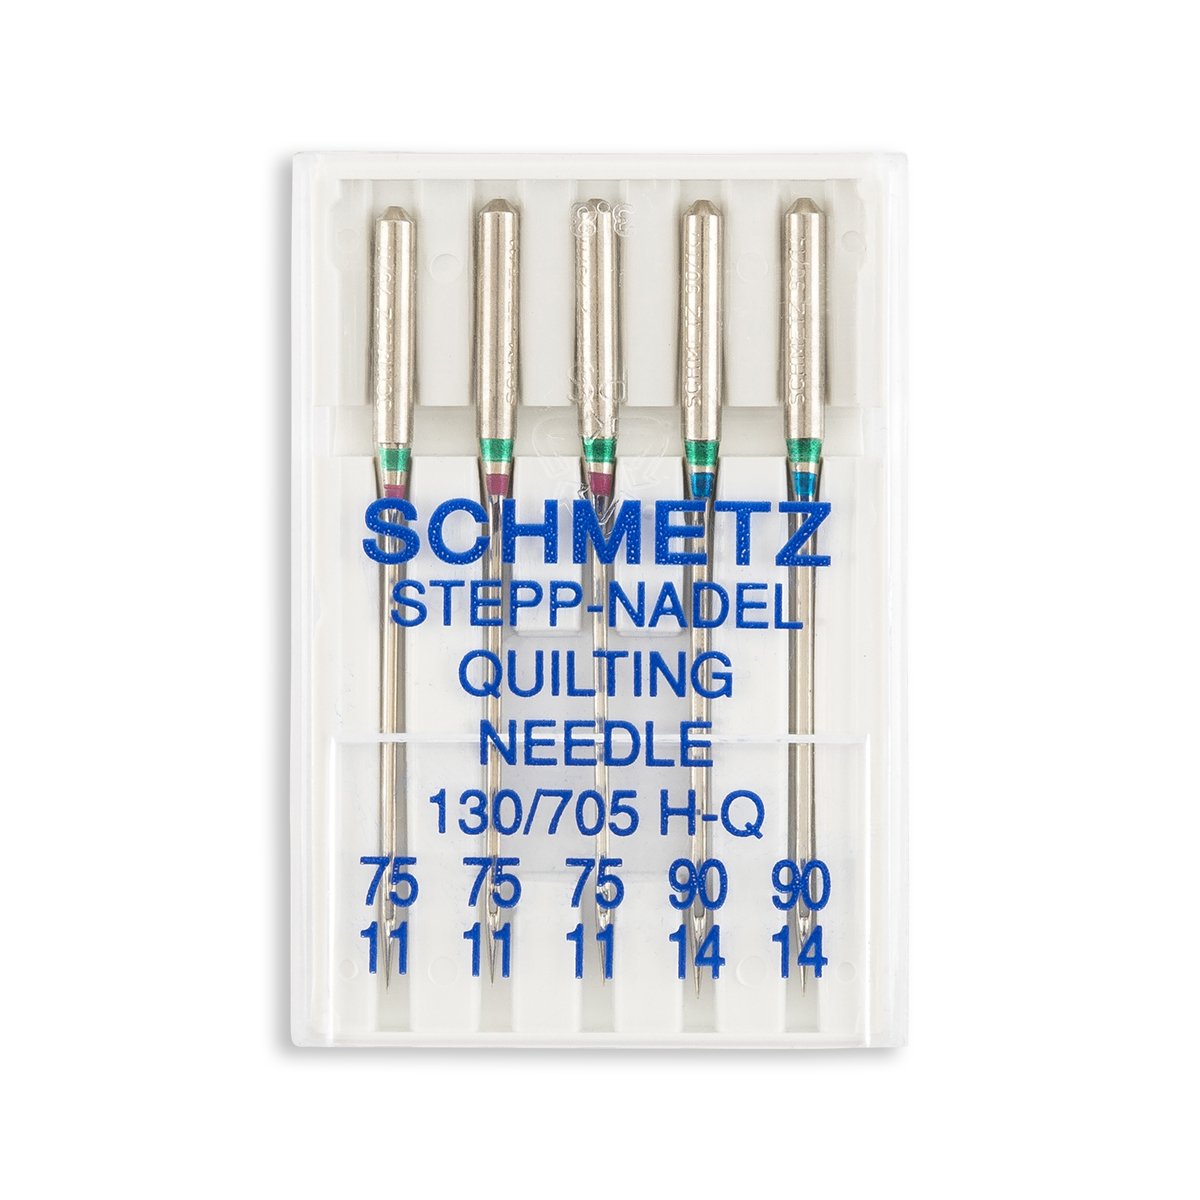 Schmetz Needles Guide For Color Indicators